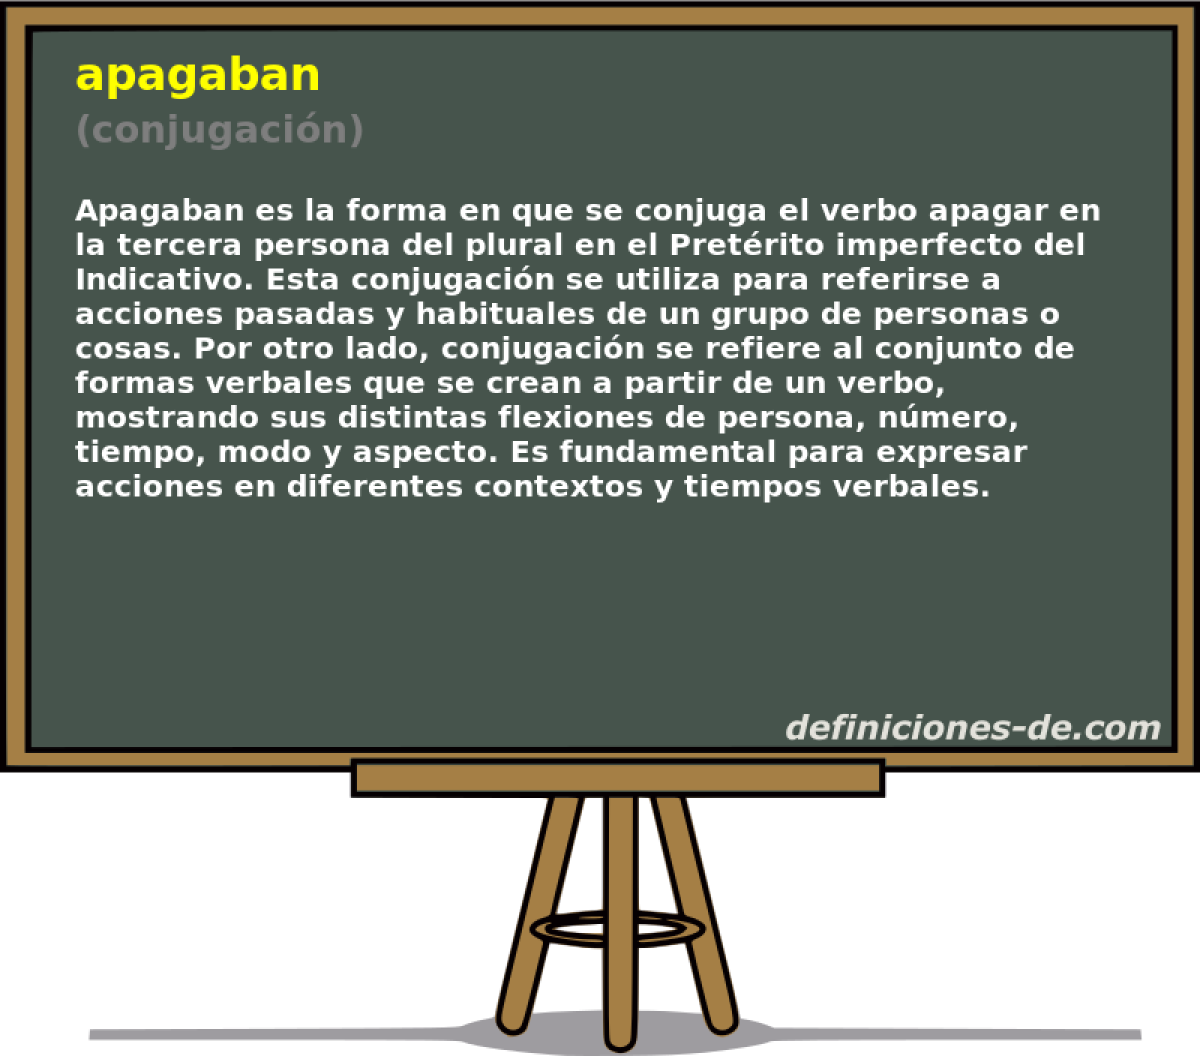 apagaban (conjugacin)